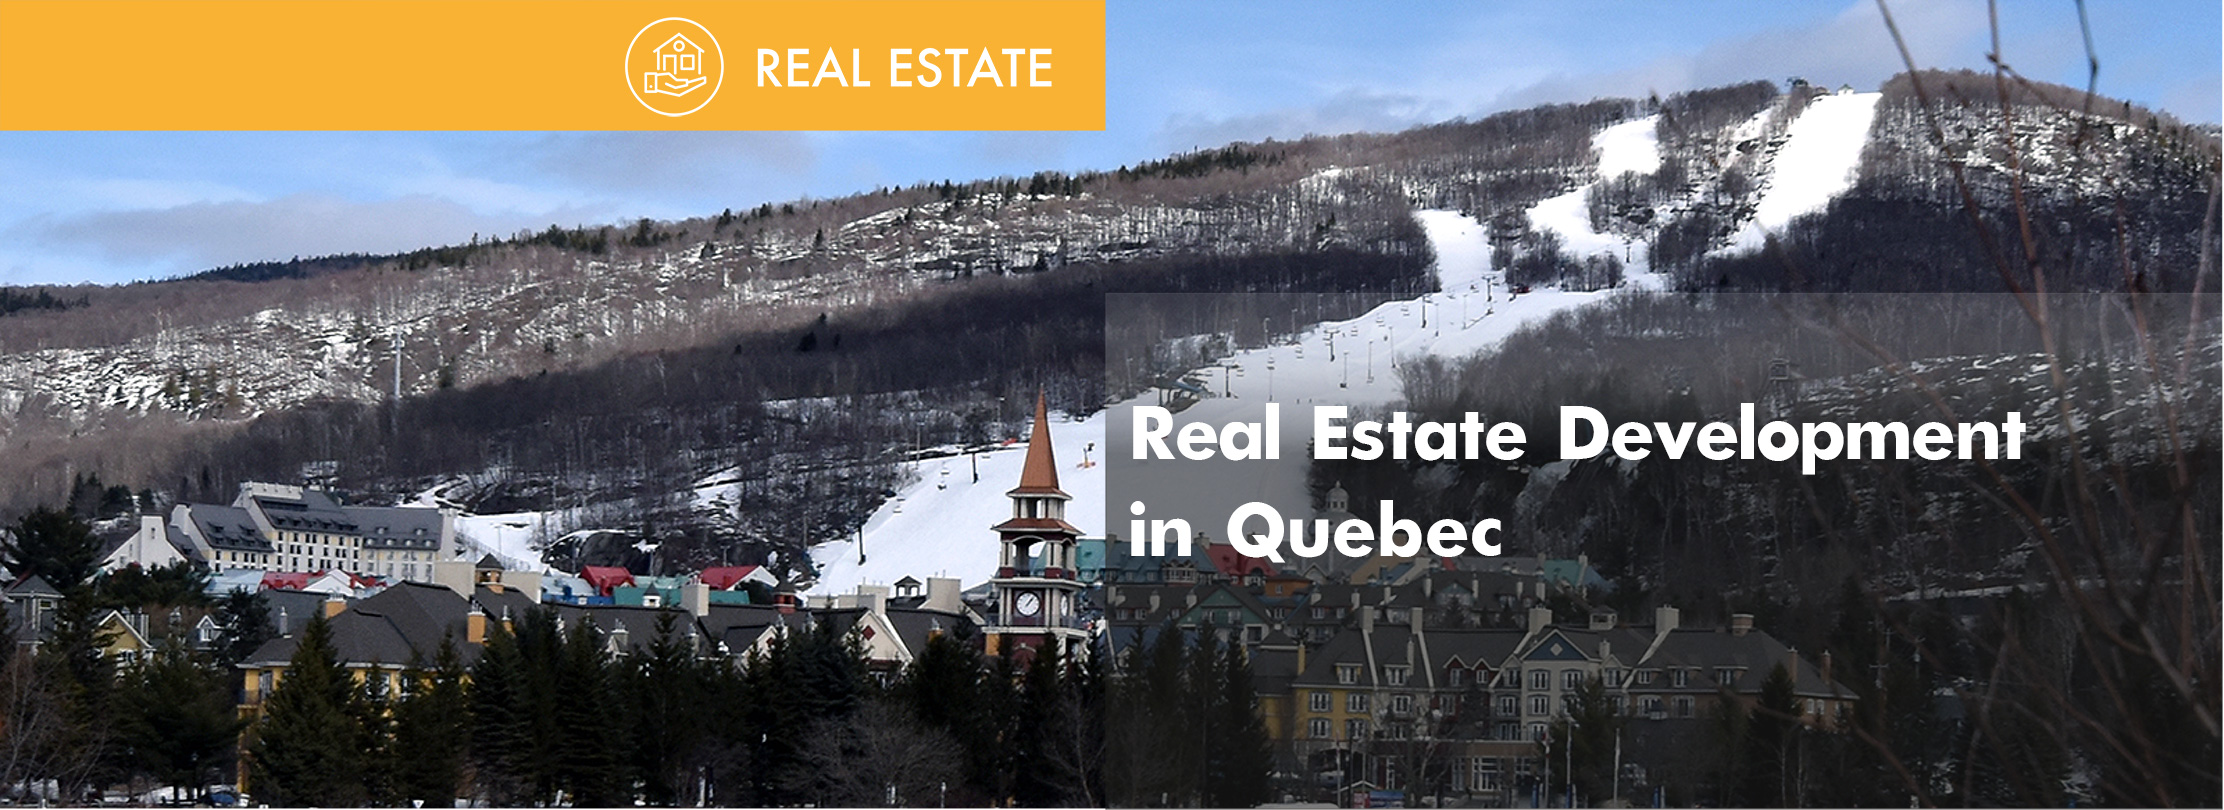 Real Estate Development in Quebec